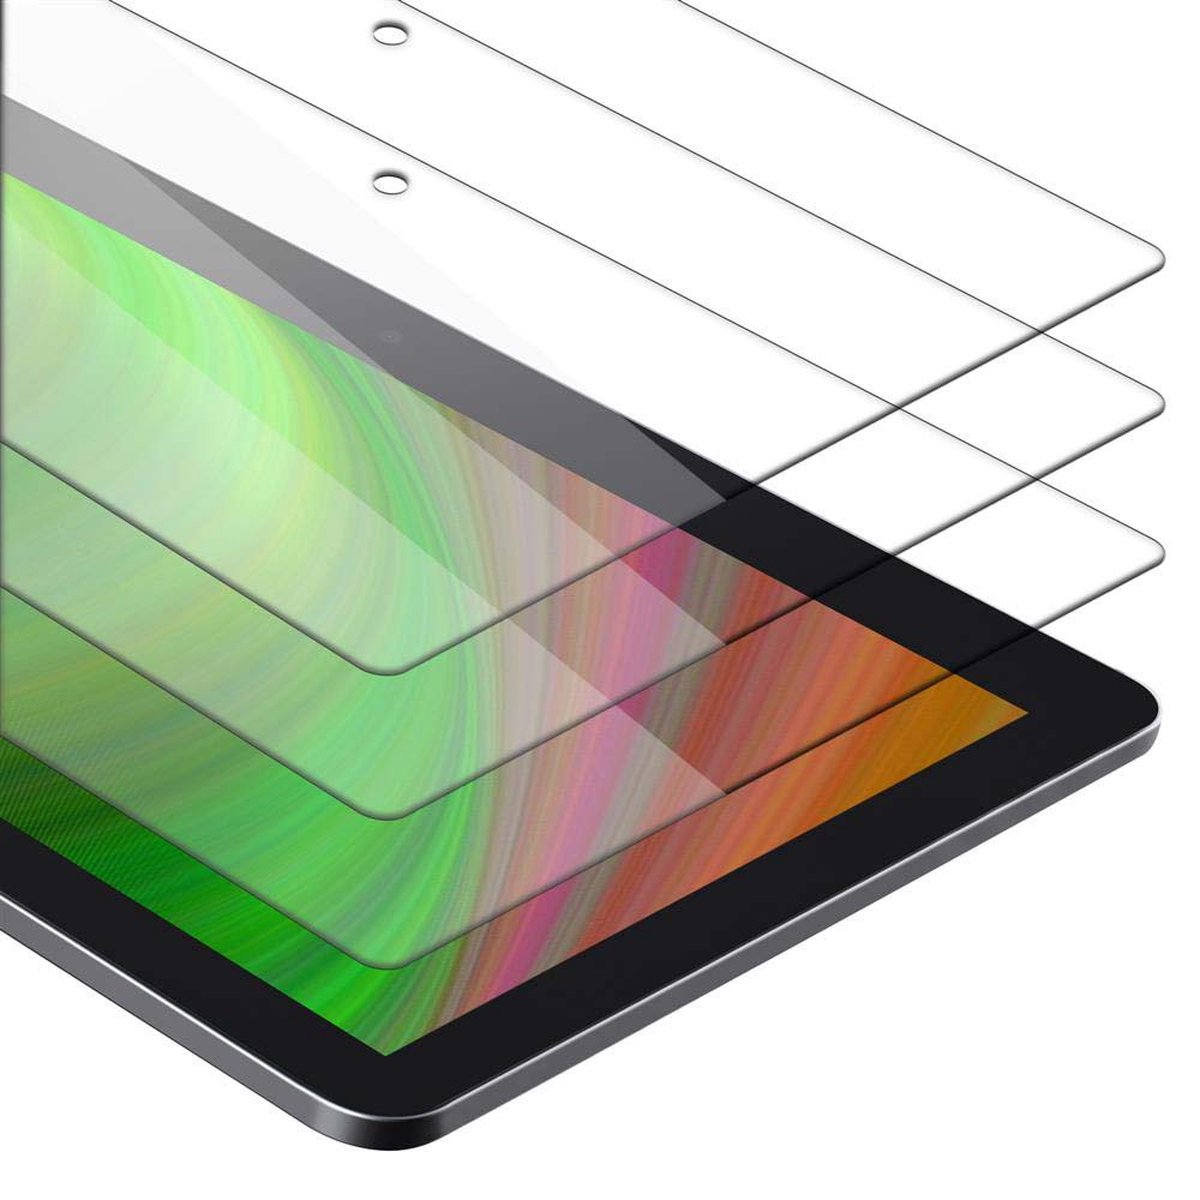 Cadorabo 3x Screenprotector voor Lenovo Tab 3 10 Business (10.1 inch) in KRISTALHELDER - Getemperd Pantser Film (Tempered) Display beschermend glas in 9H hardheid met 3D Touch